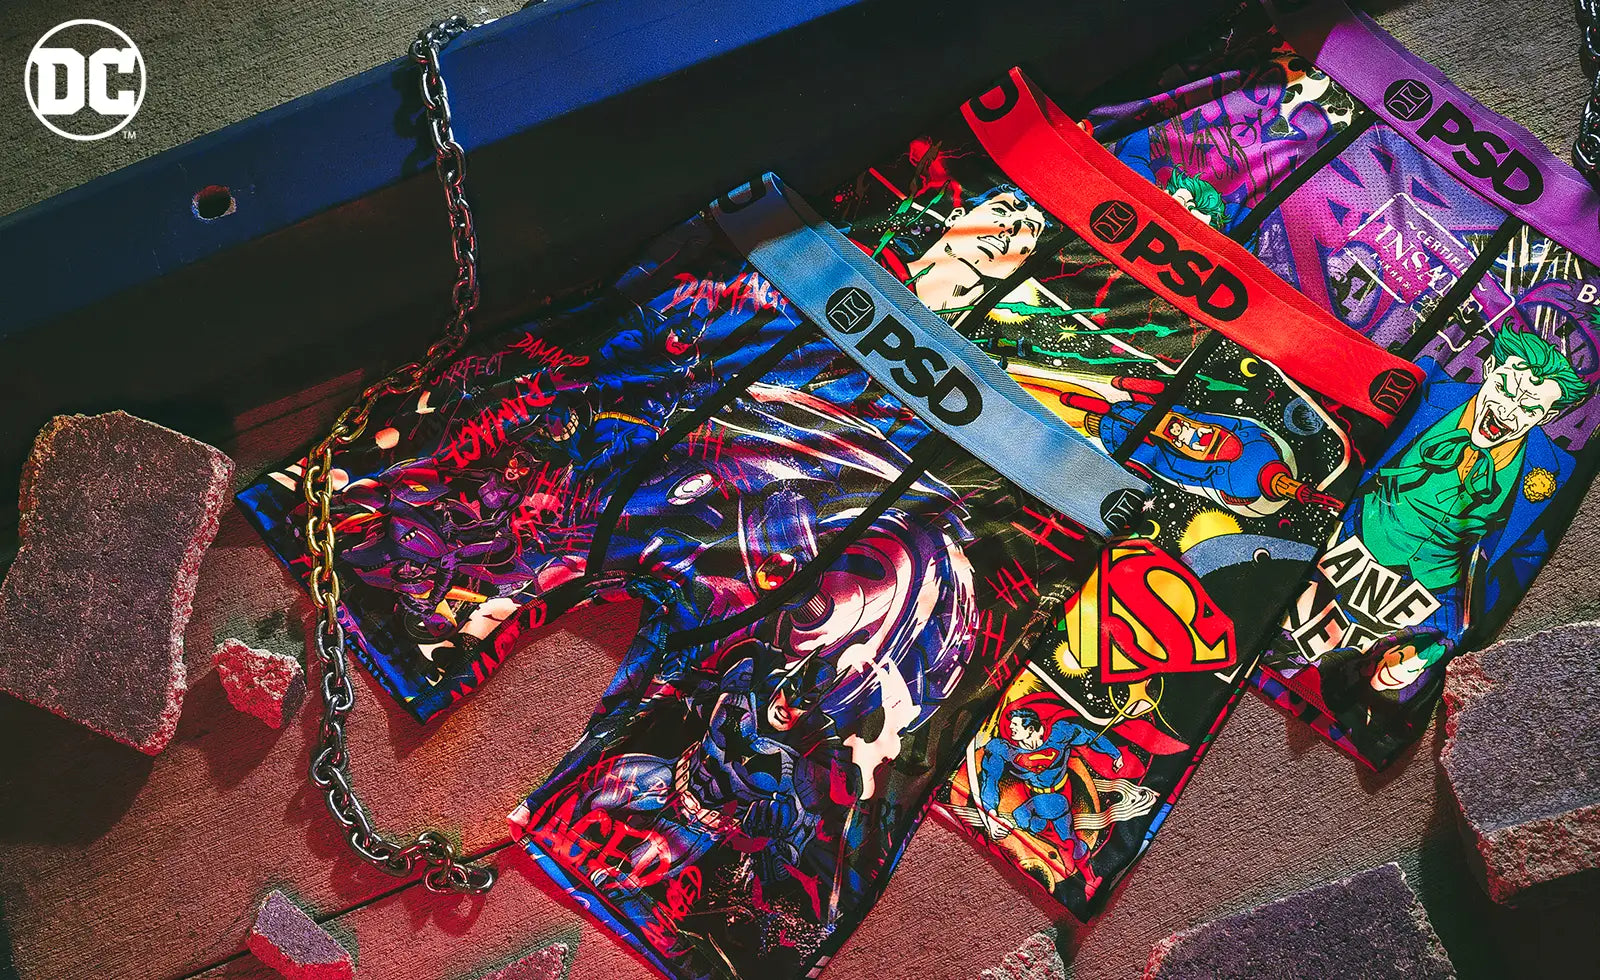 PSD Underwear Batman Flash Wonderwoman Joker Superman boxer brief DC S M L  XL 2X, psd 